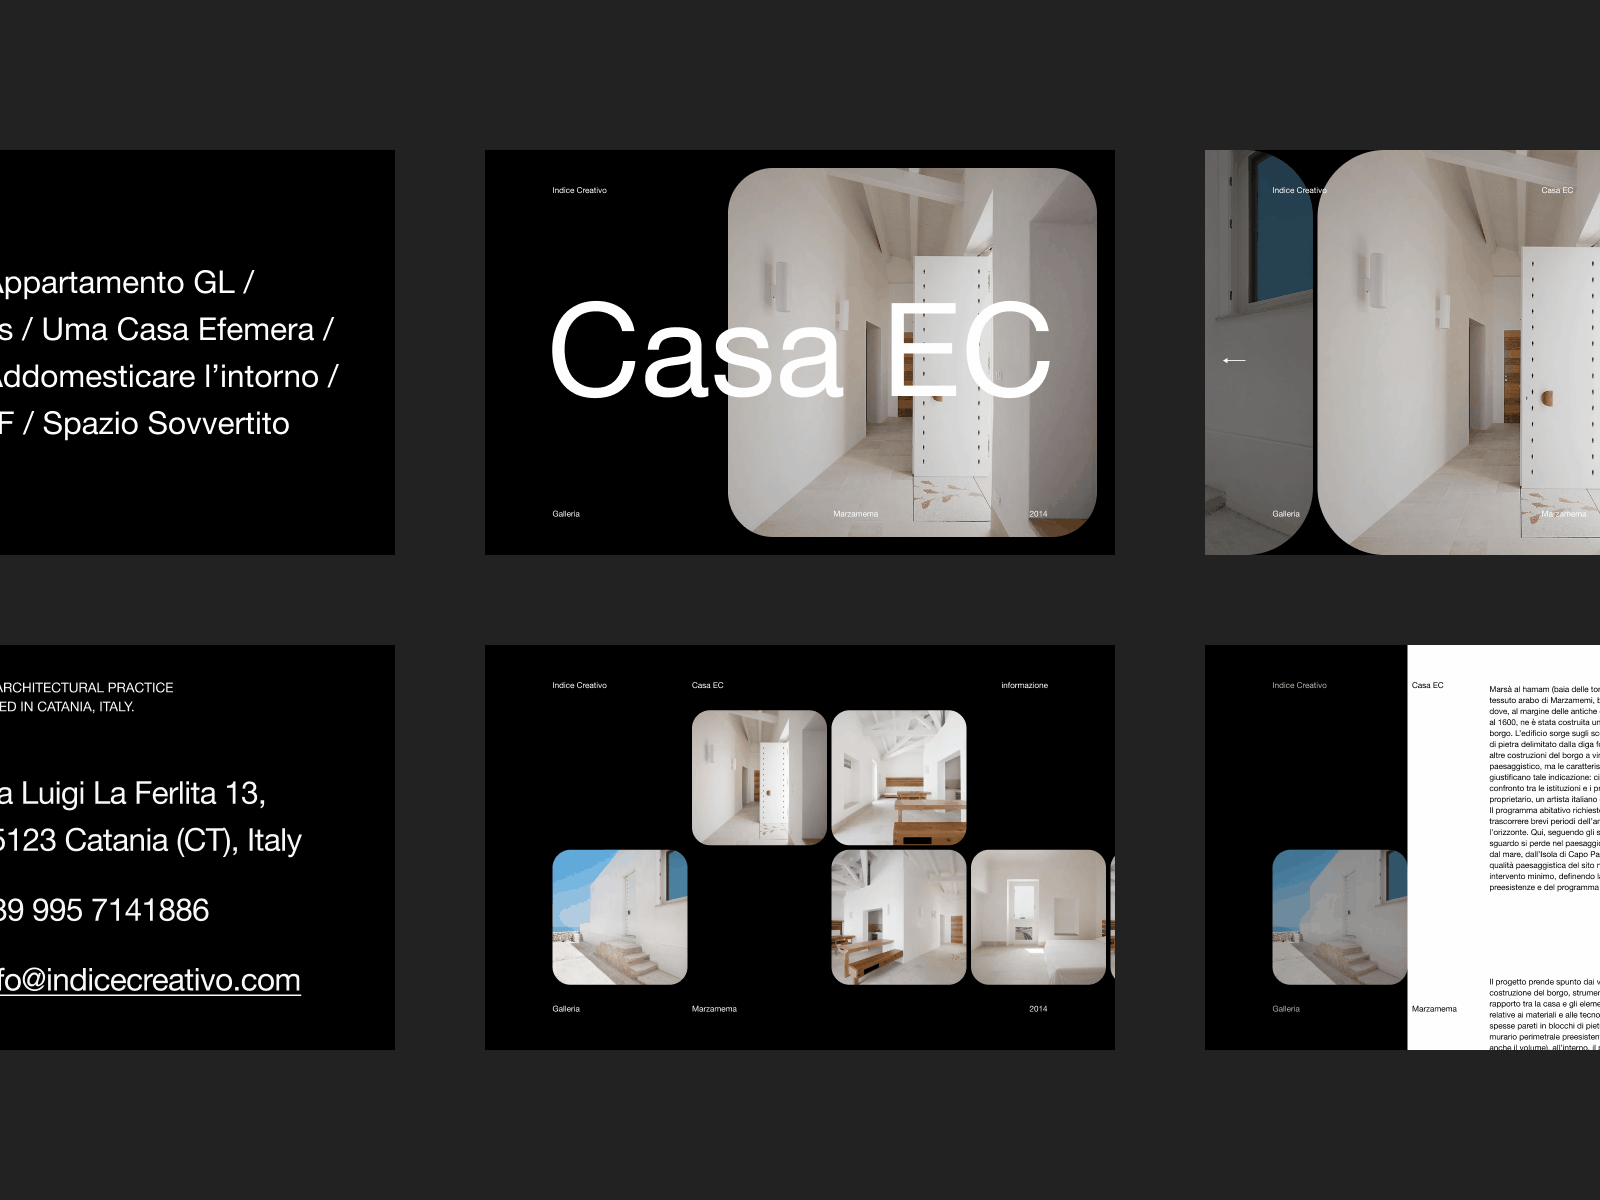 Indice Creativo - Casa EC - Transition exploration 02